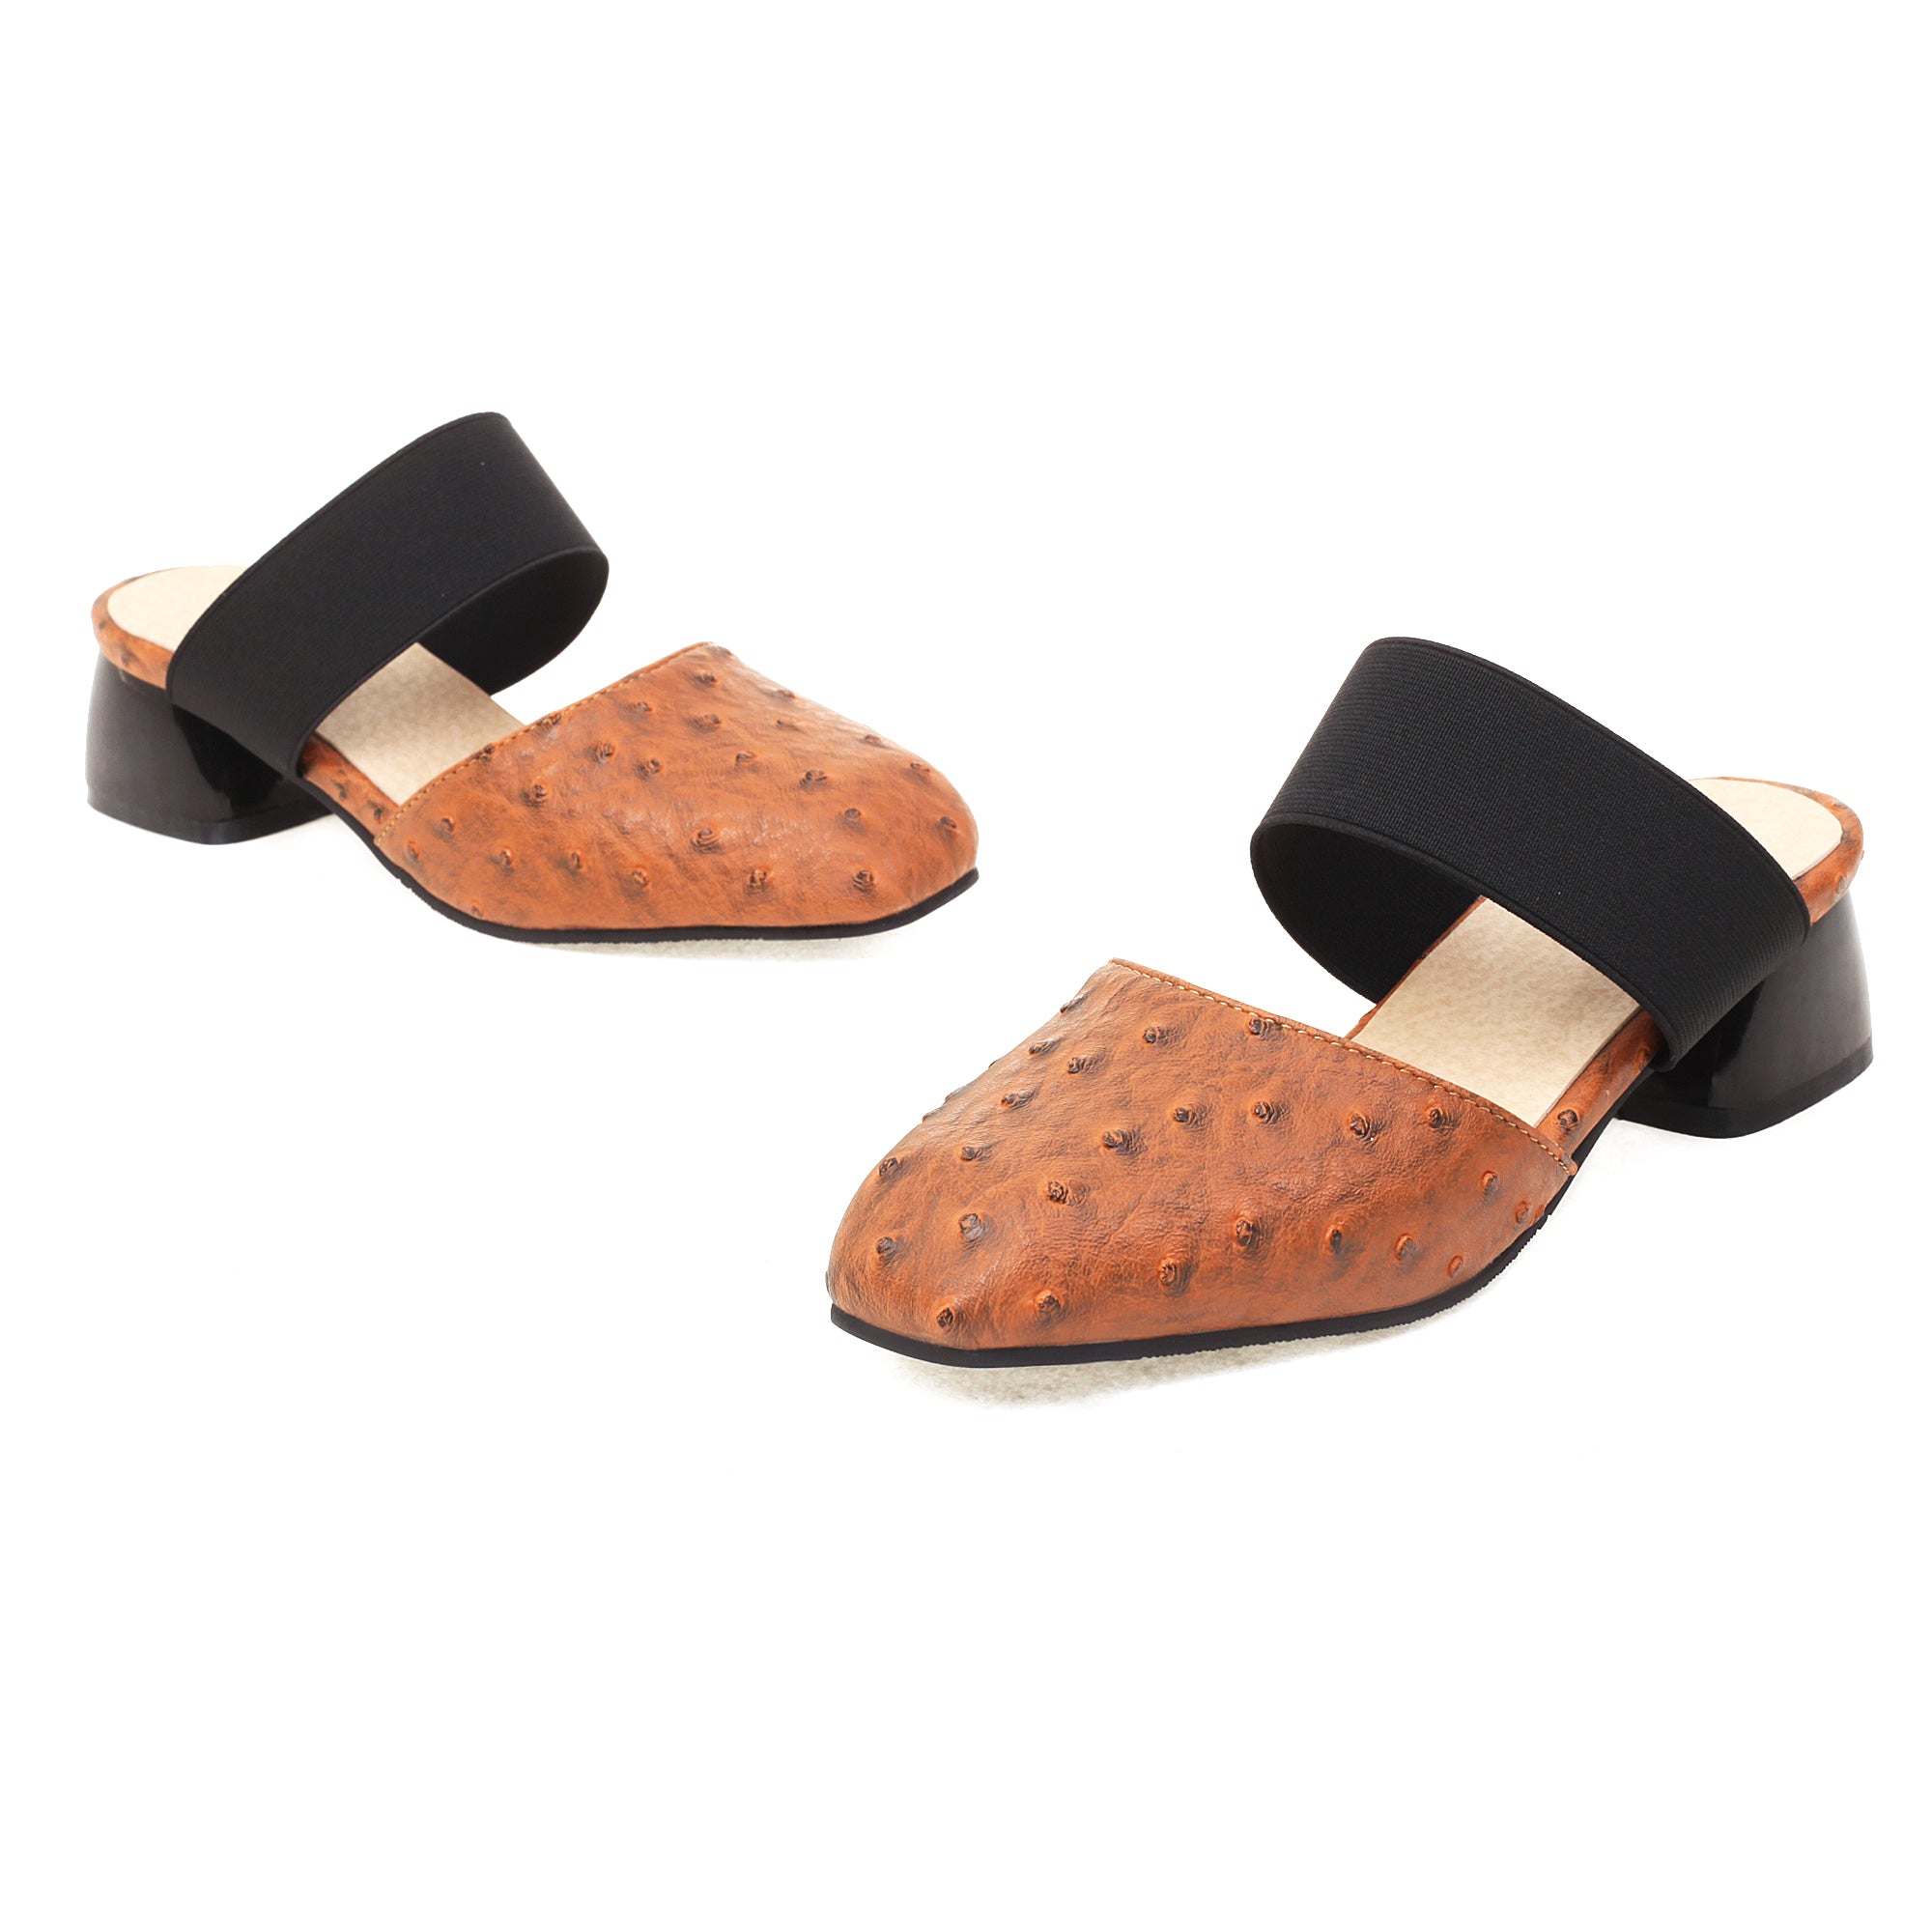 Bigsizeheels Simple Round Toe Flat Sandals - Brown best oversized womens heels are from bigsizeheels®